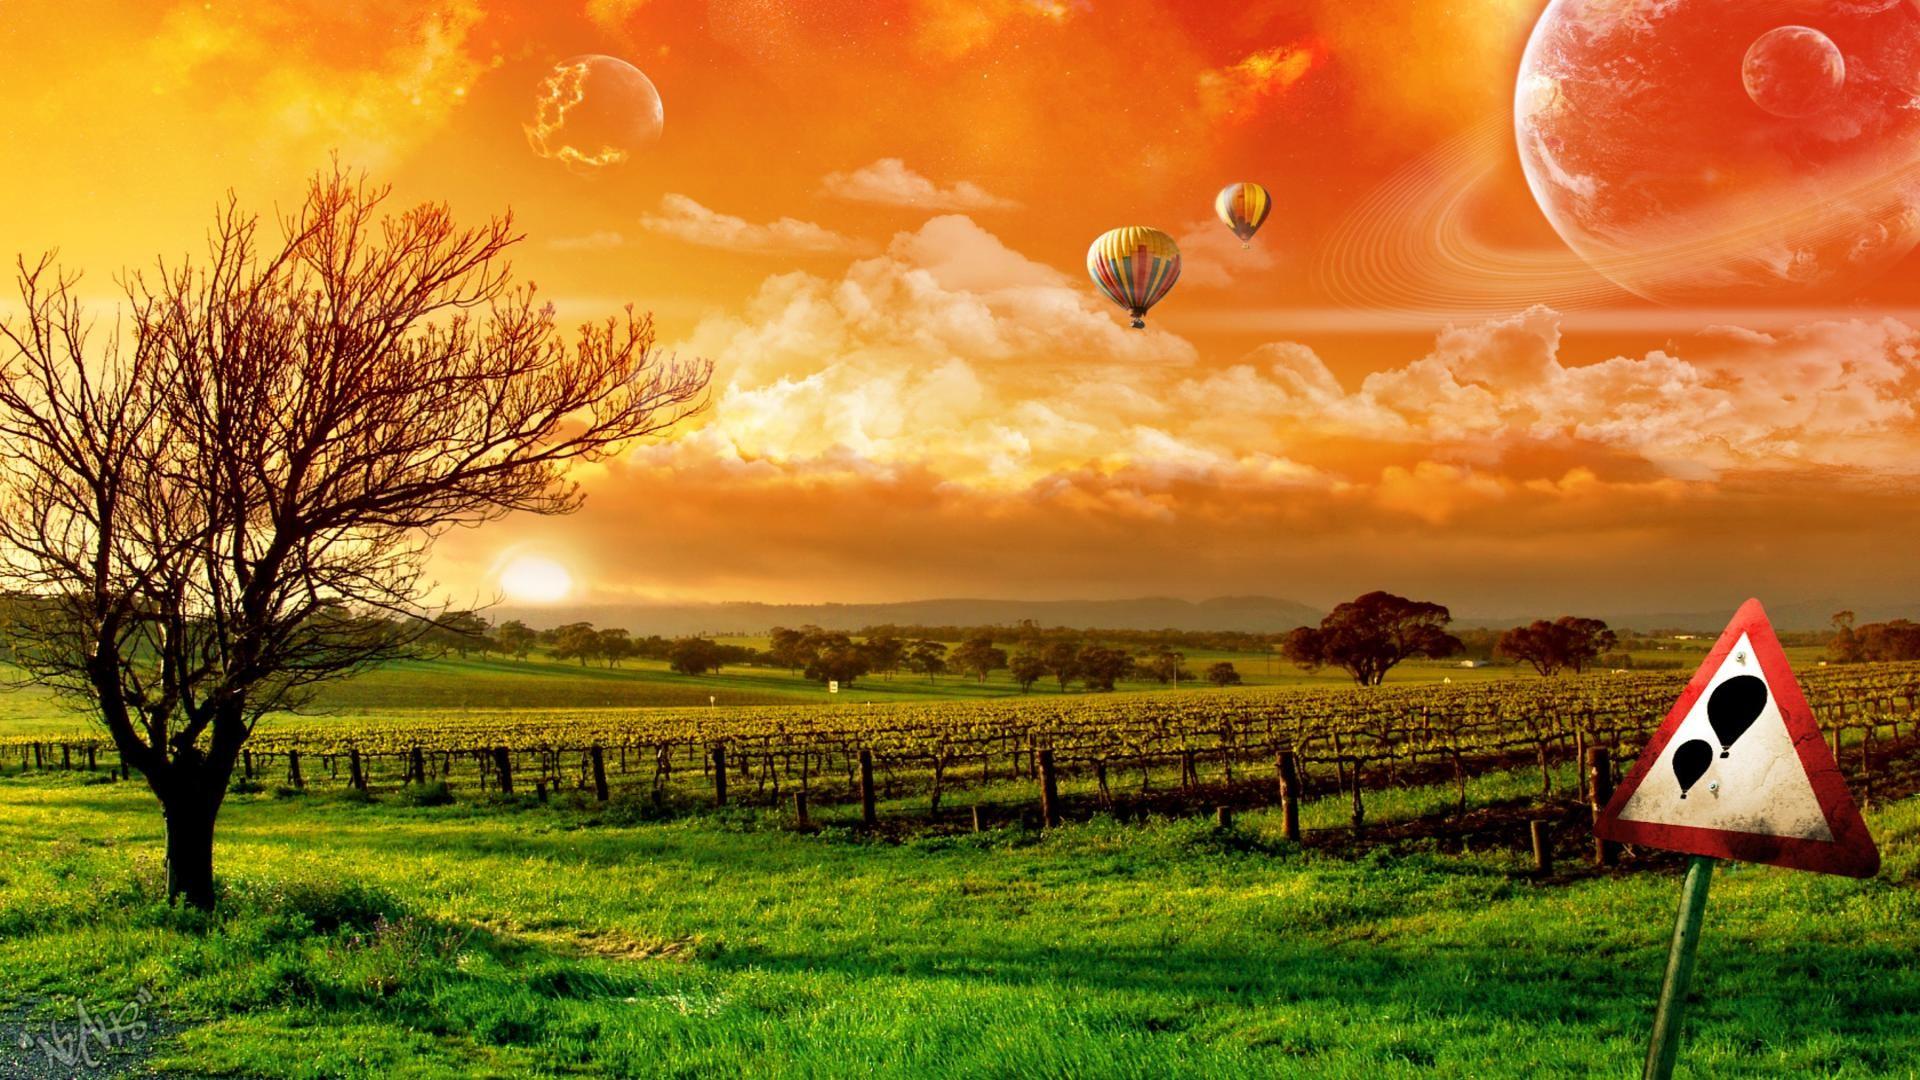 Photoshop balloon ride free desktop background - free wallpaper image